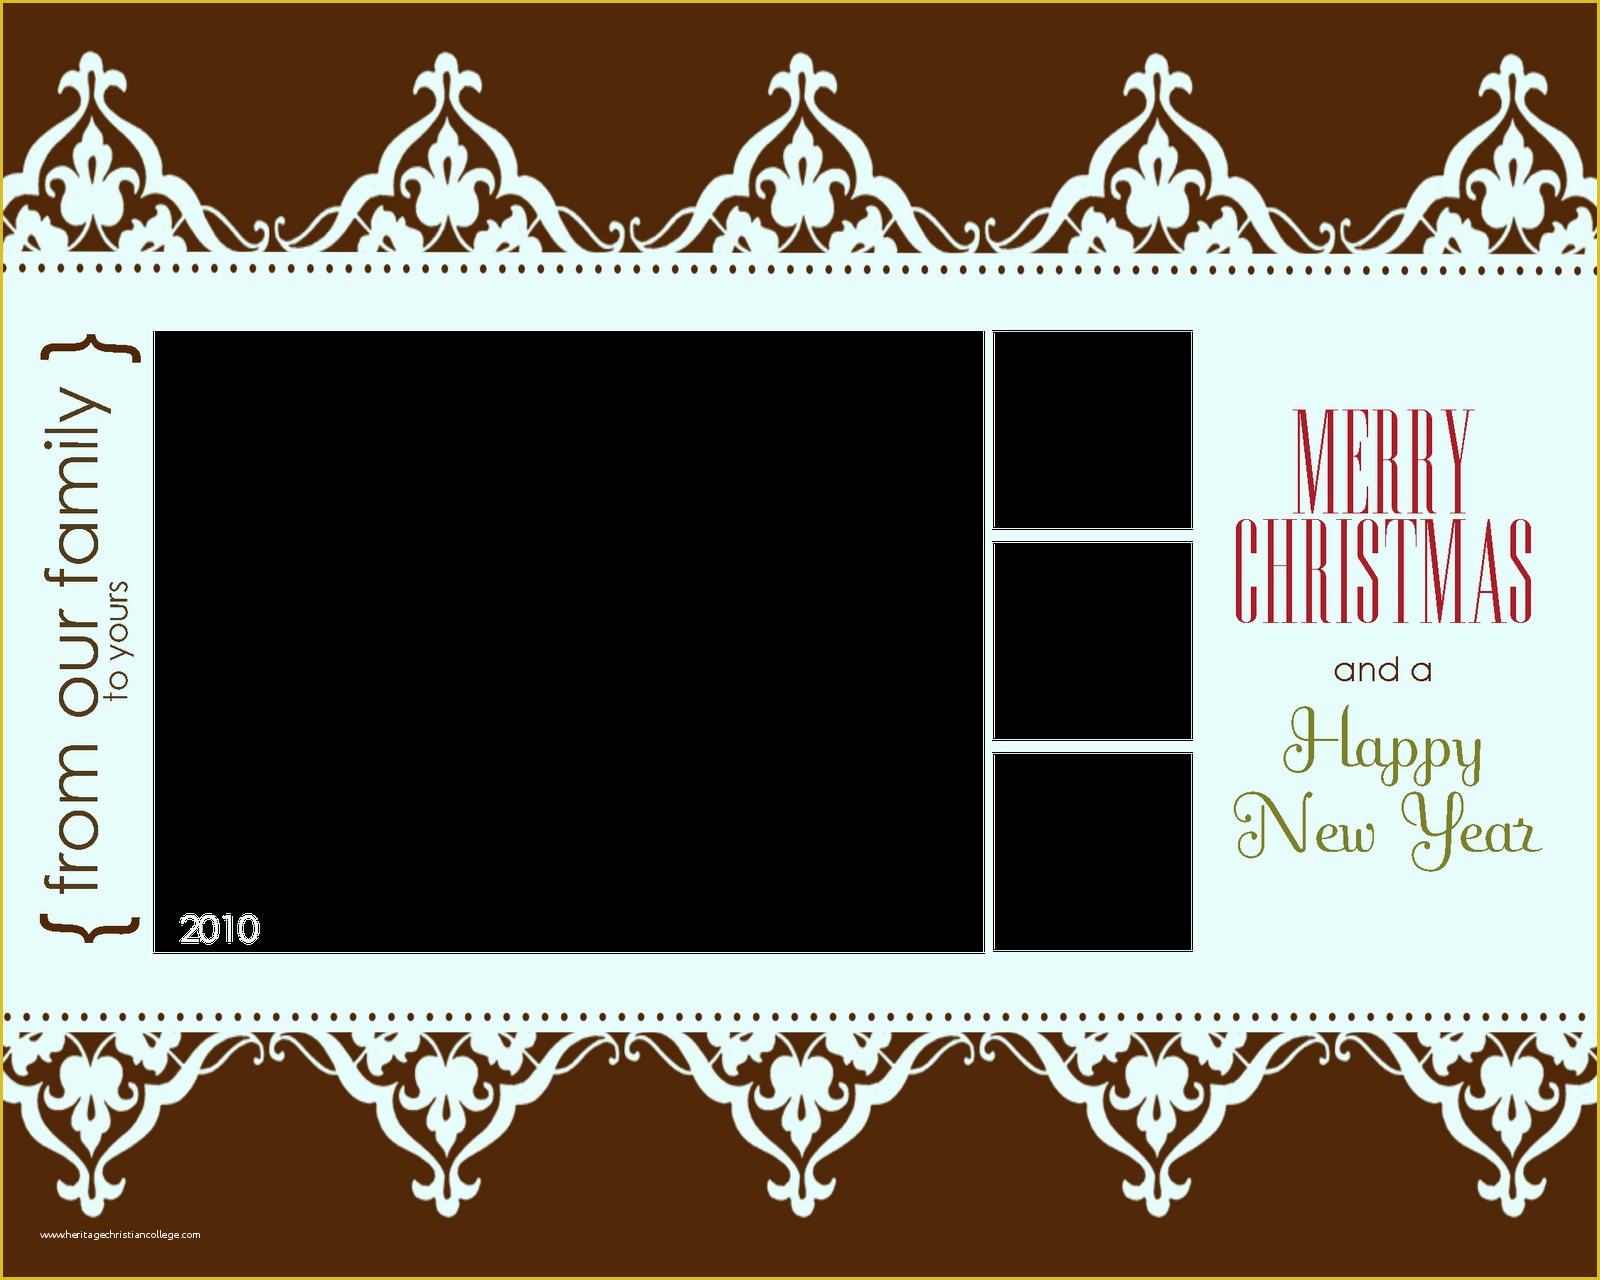 Free Xmas Postcards Templates Of Milkandhoneydesigns My Loss Your Gain Free Christmas